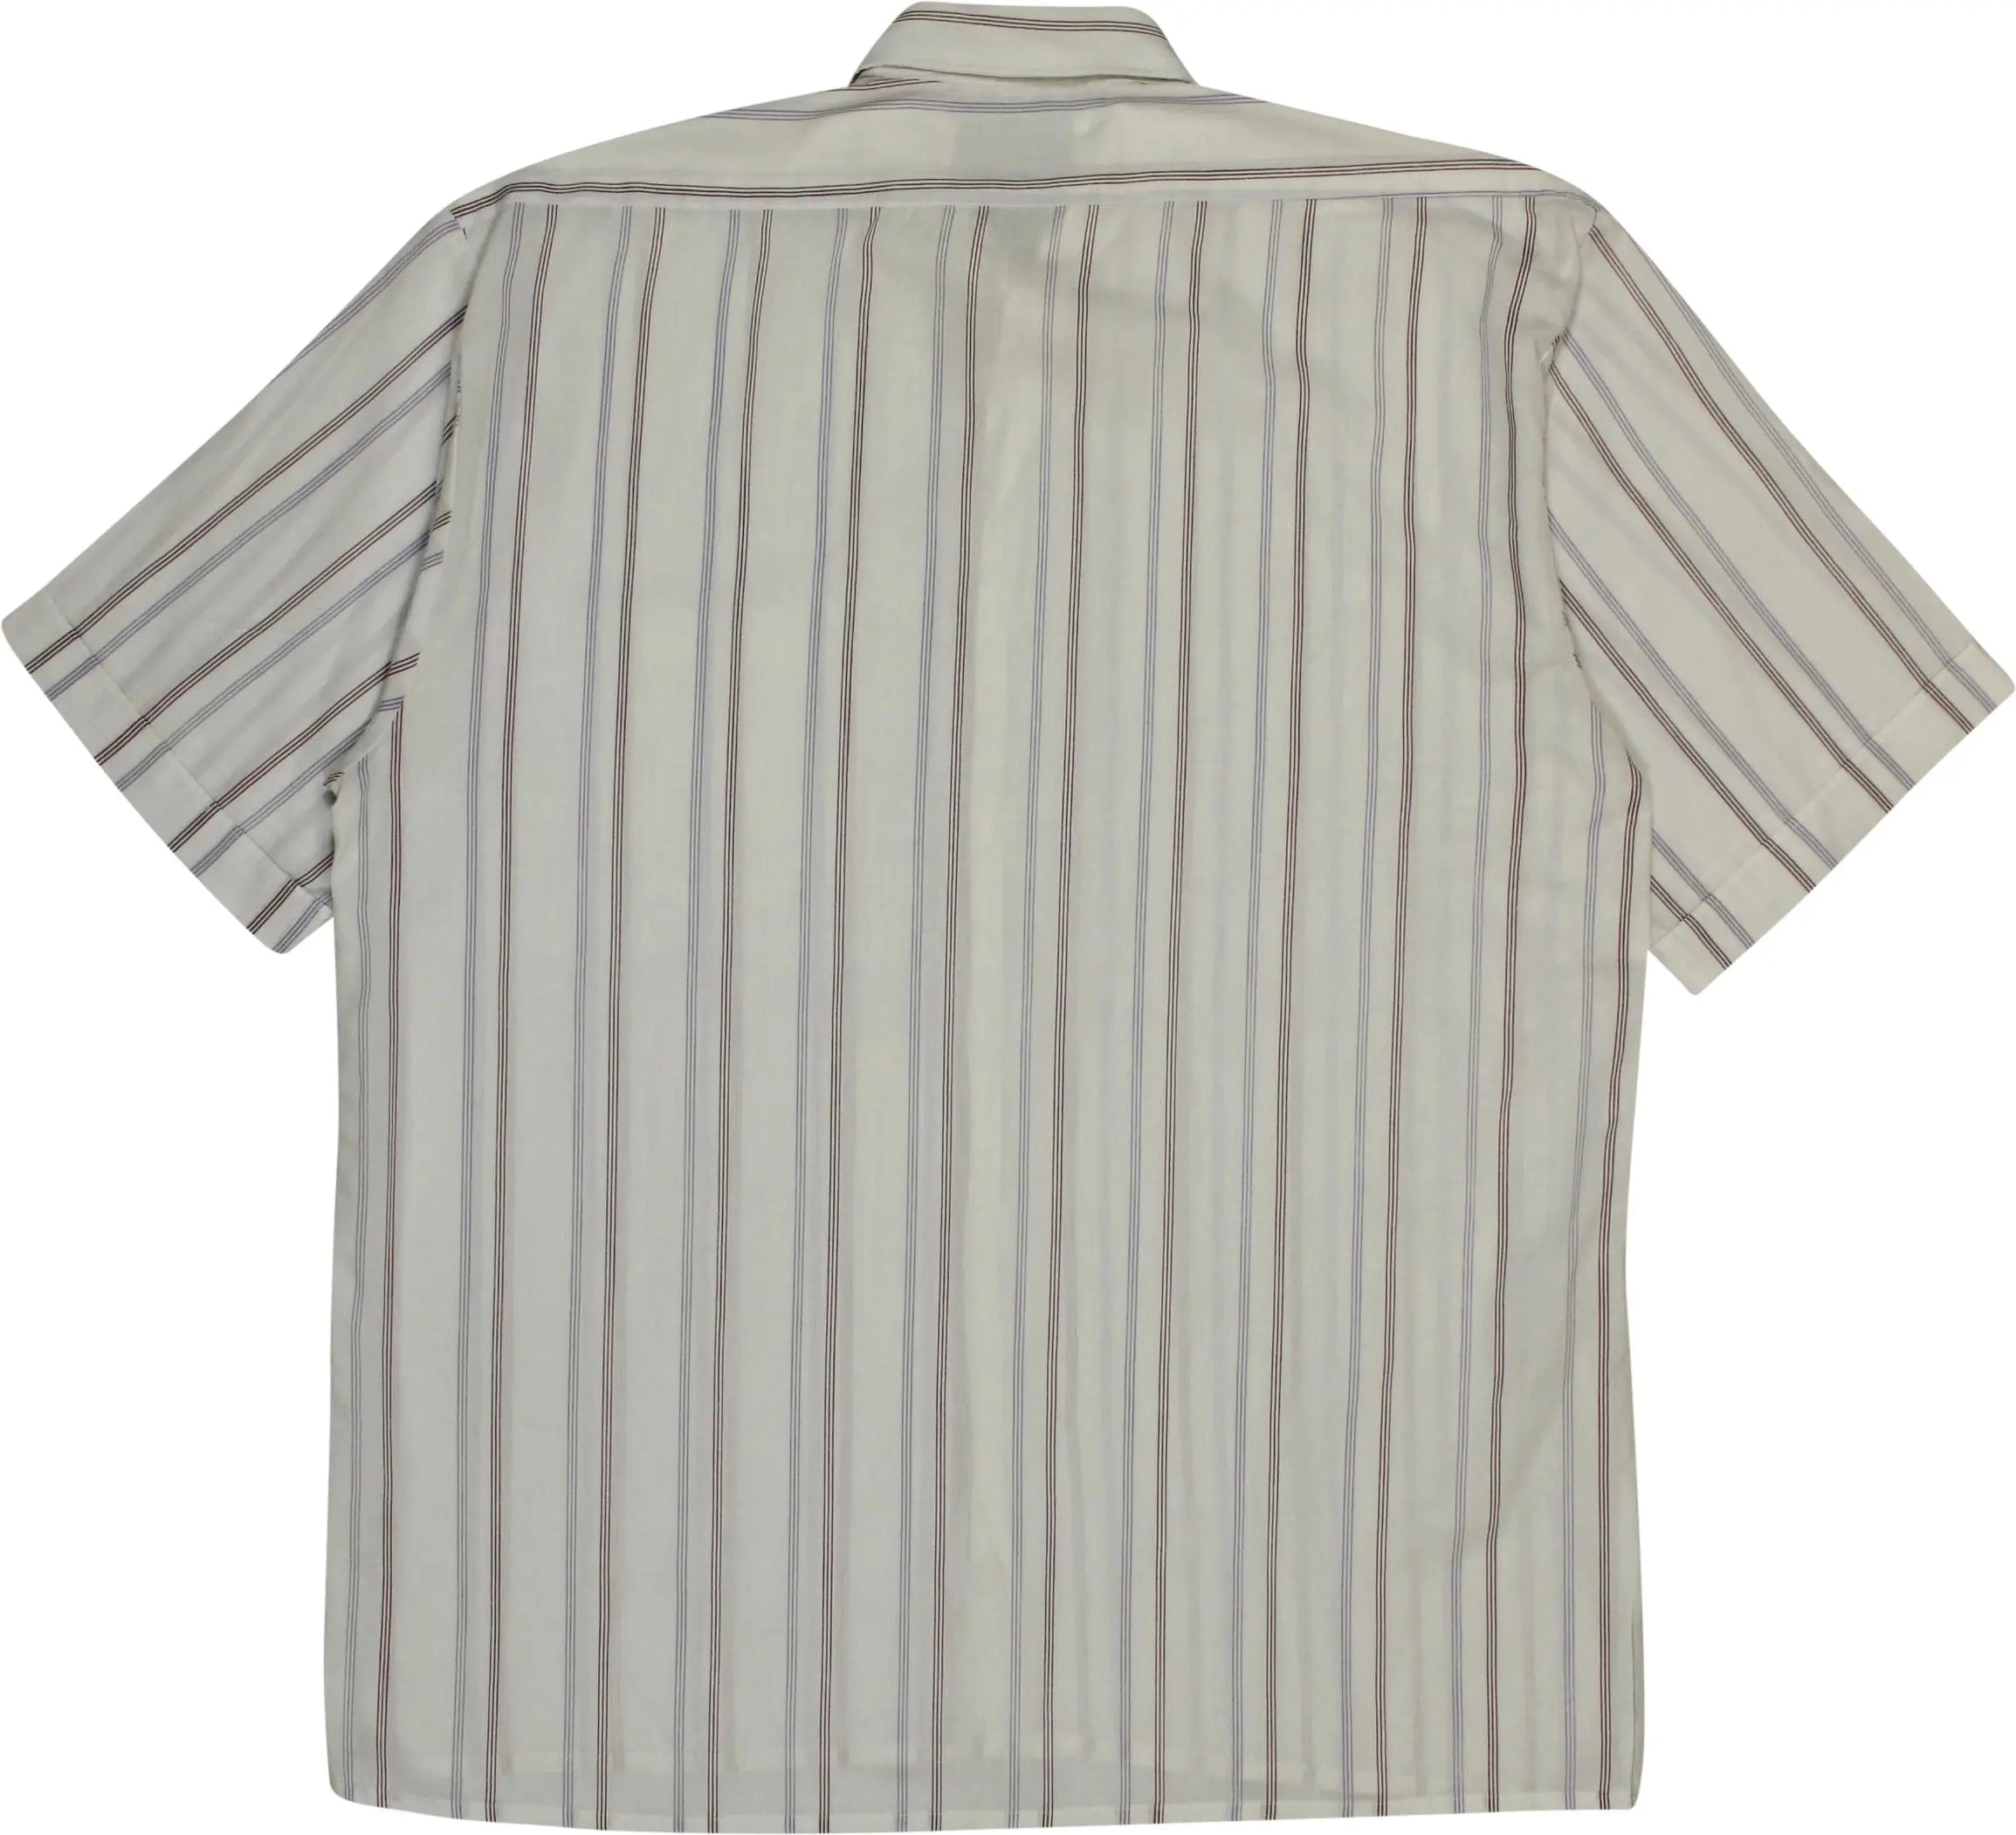 Ricardo Verdi - Striped Short Sleeve Shirt- ThriftTale.com - Vintage and second handclothing